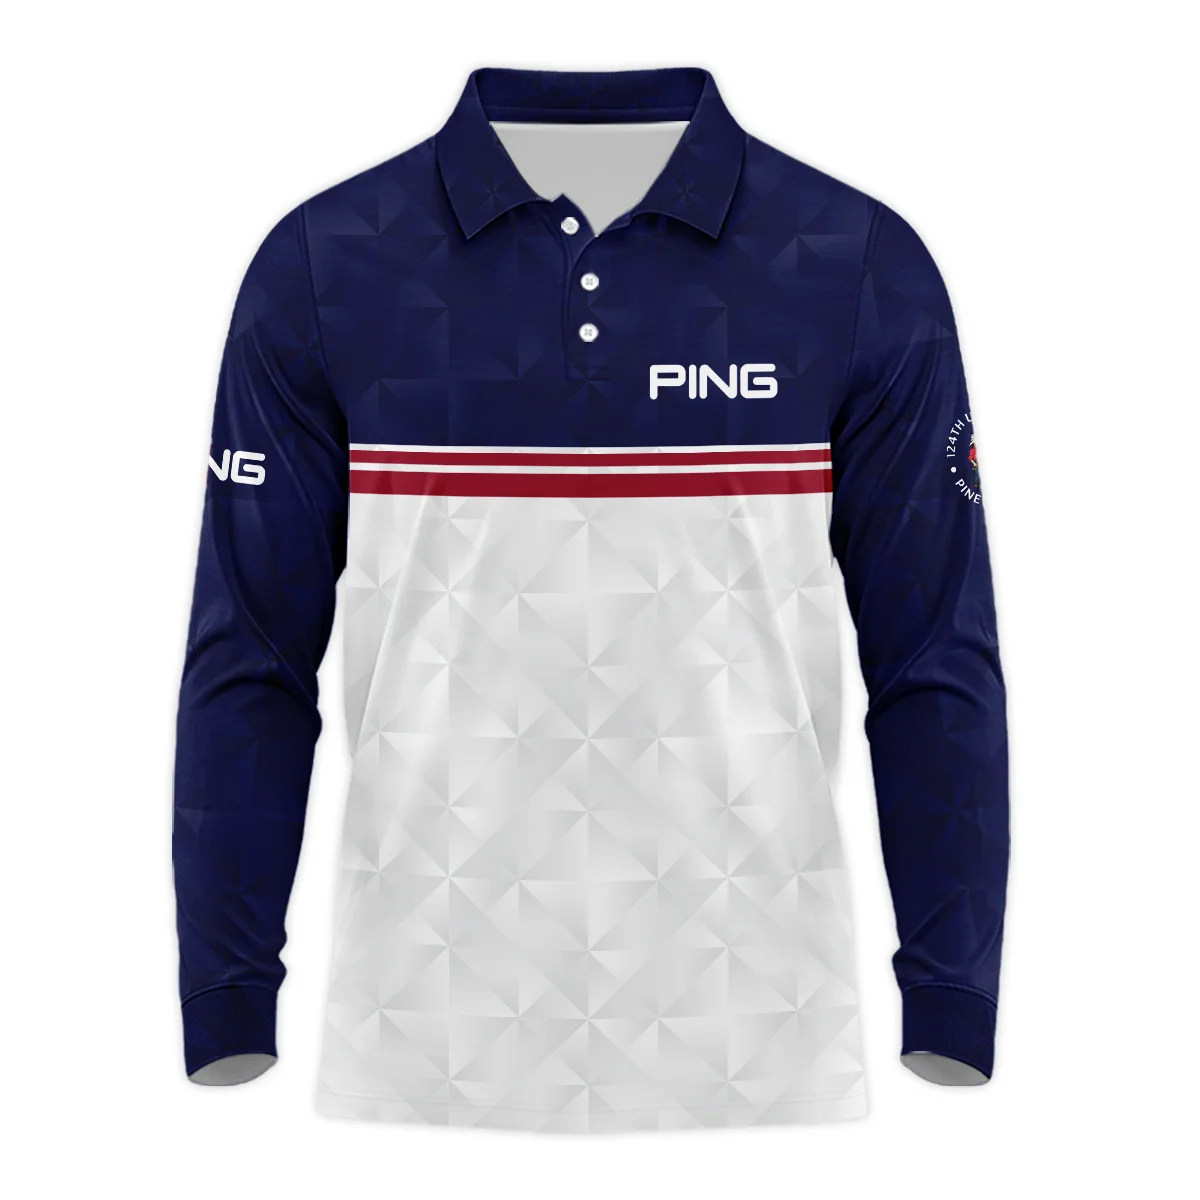 Golf Sport 124th U.S. Open Pinehurst Ping Quarter-Zip Jacket Dark Blue White Abstract Geometric Triangles All Over Print Quarter-Zip Jacket